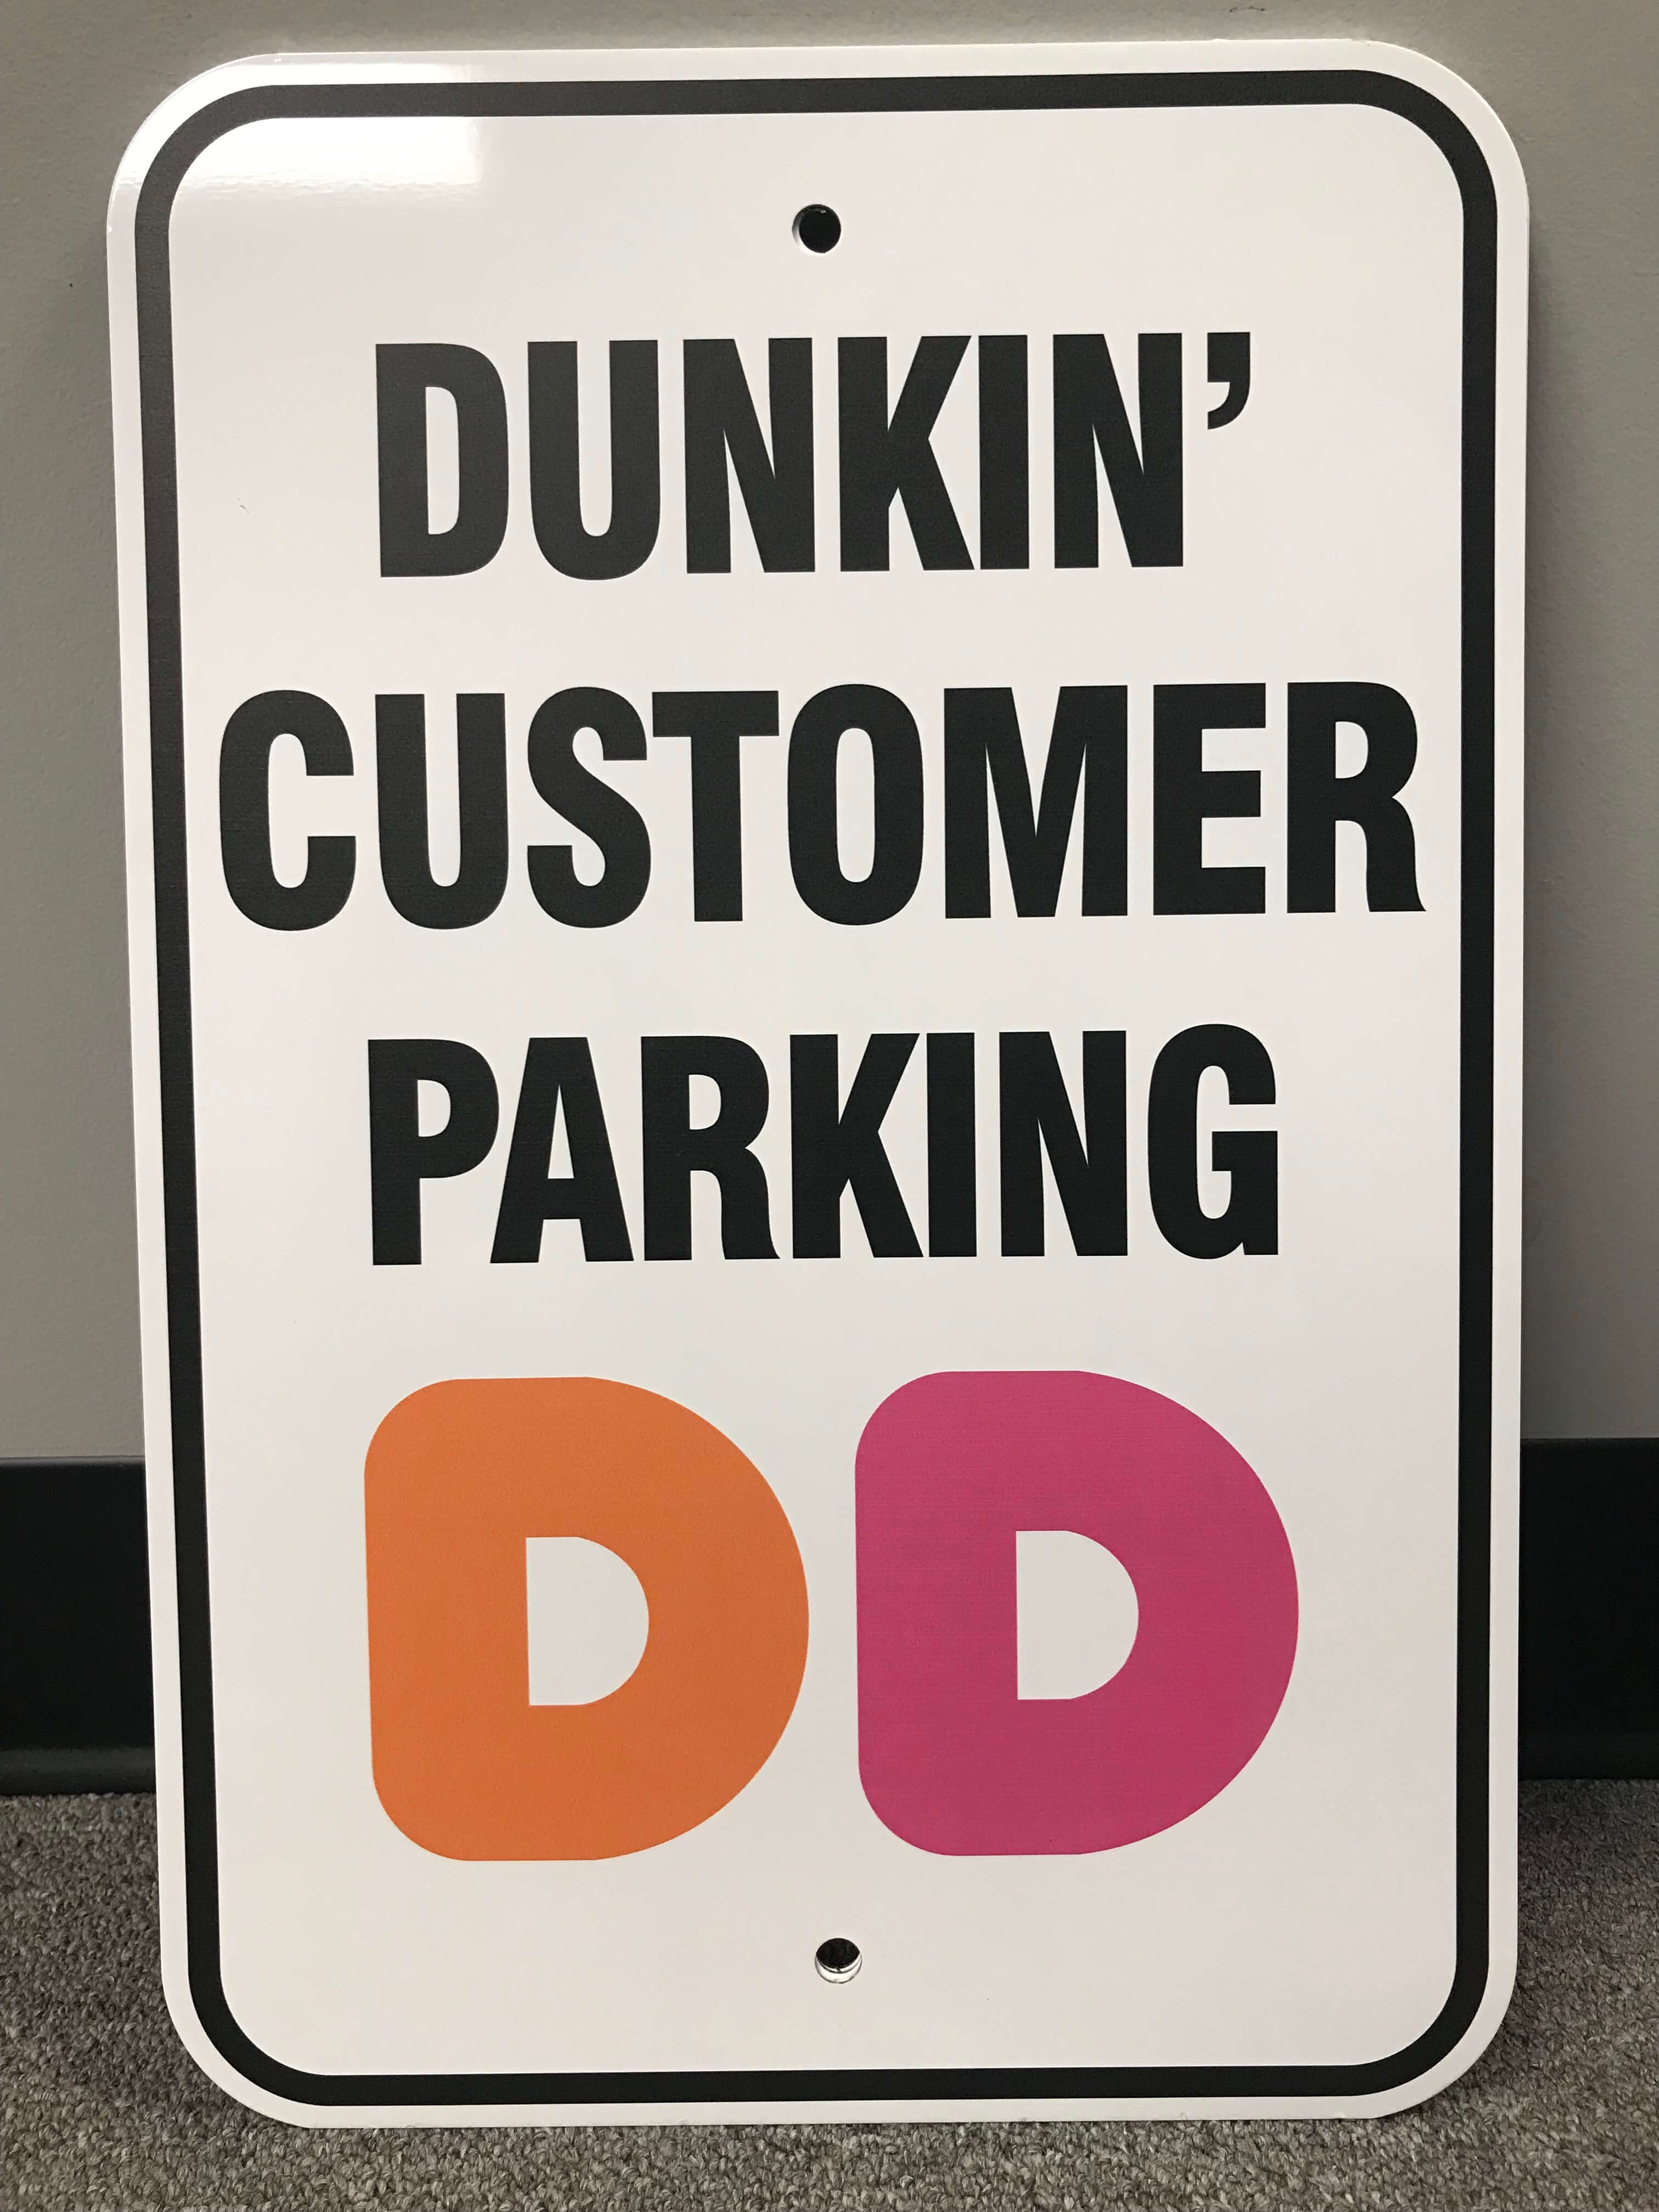 Dunkin' Customer Parking sign